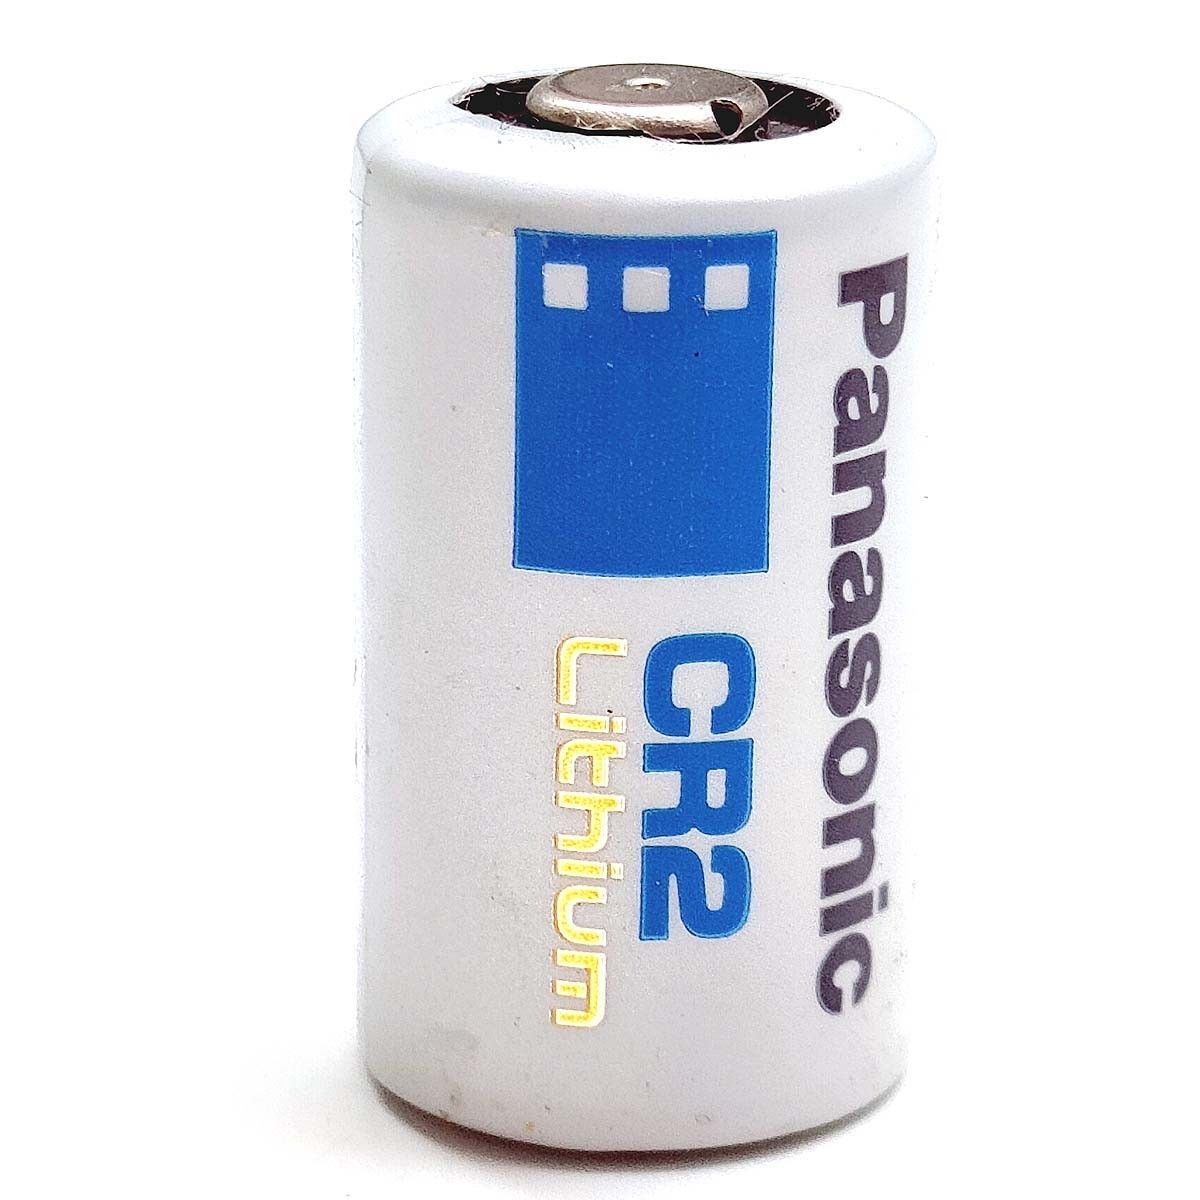 CR2 リチウム電池【1個】3V パナソニック Panasonic 円筒形電池 CR-2W 4984824335738